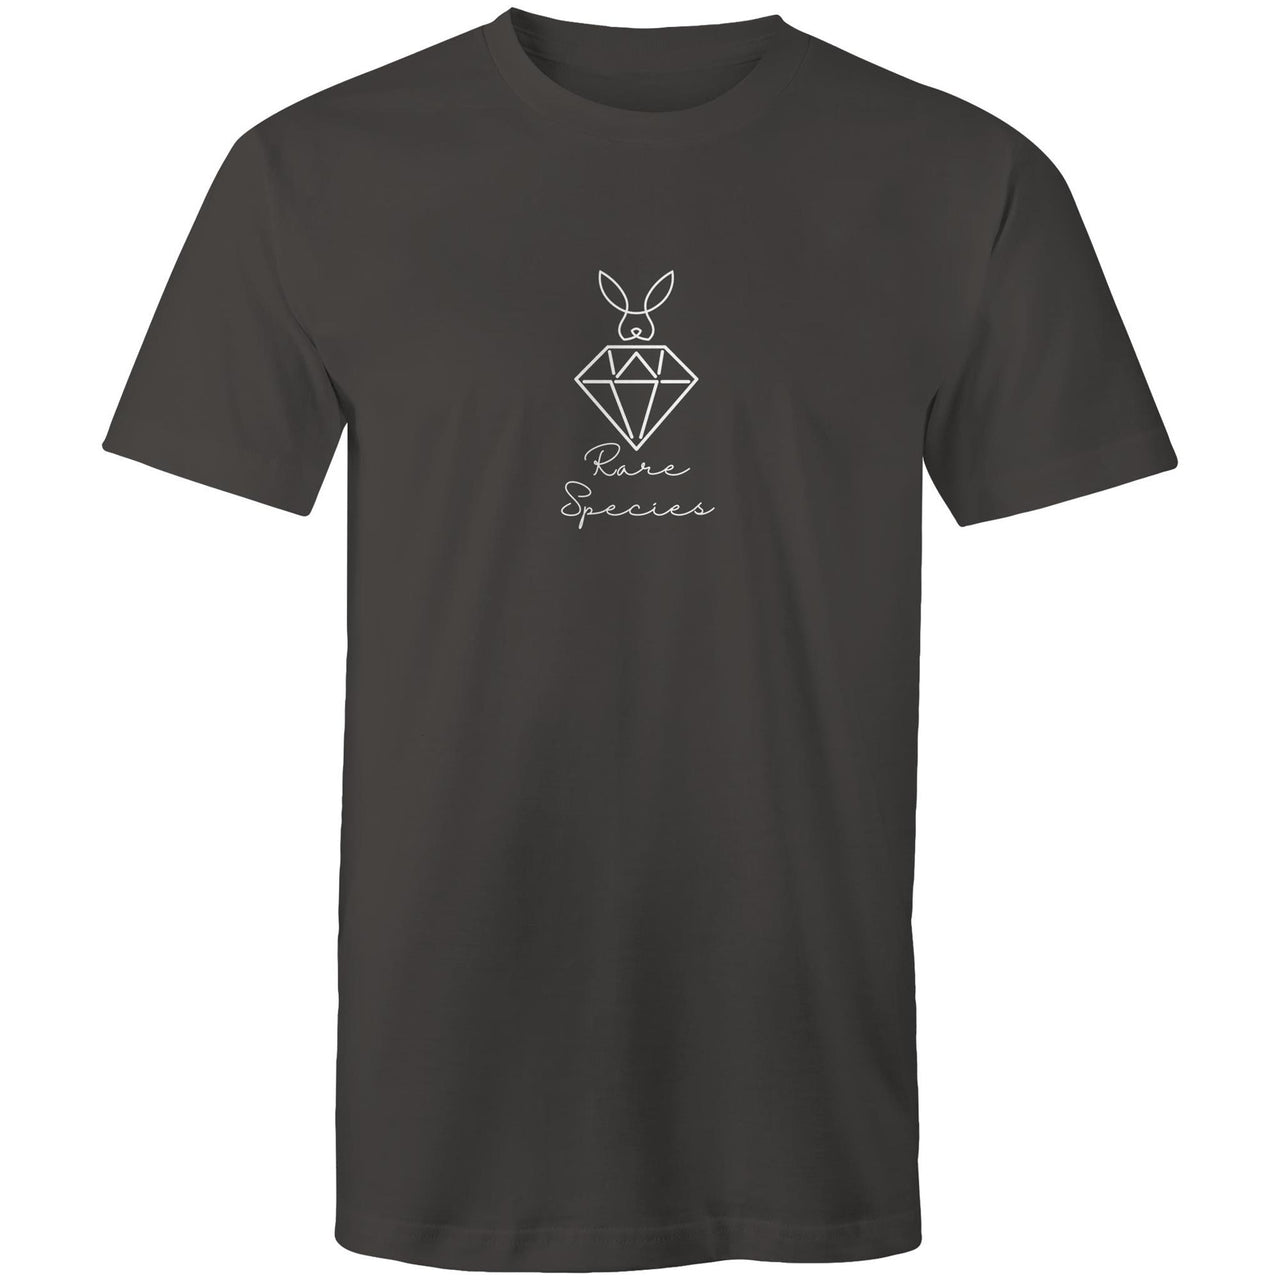 CBF Rare Species Crew T-Shirt charcoal by CBF Clothing